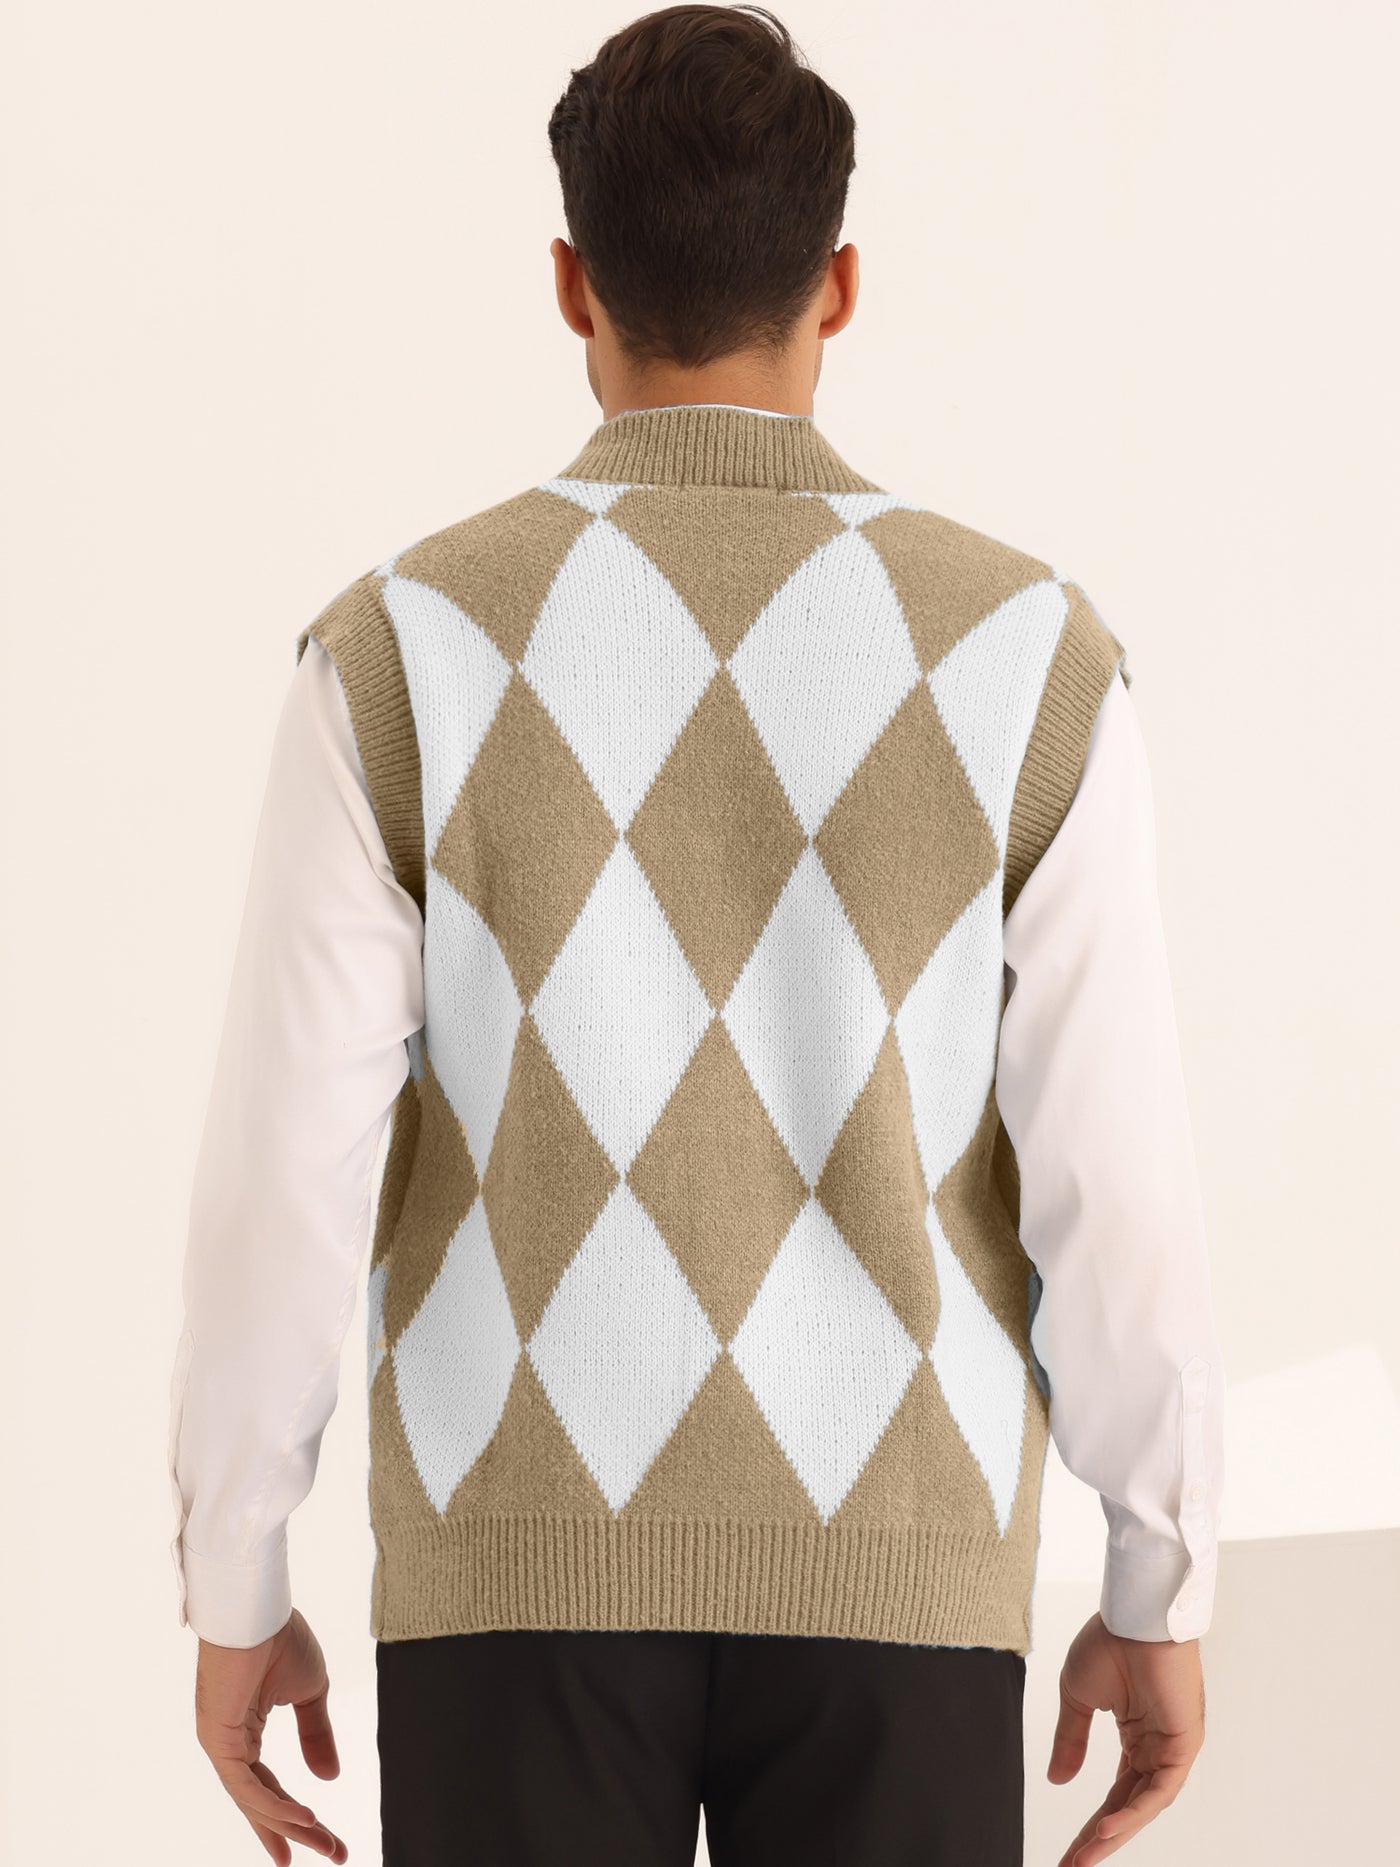 Bublédon Men's Classic V Neck Button Sleeveless Knit Sweater Cardigan